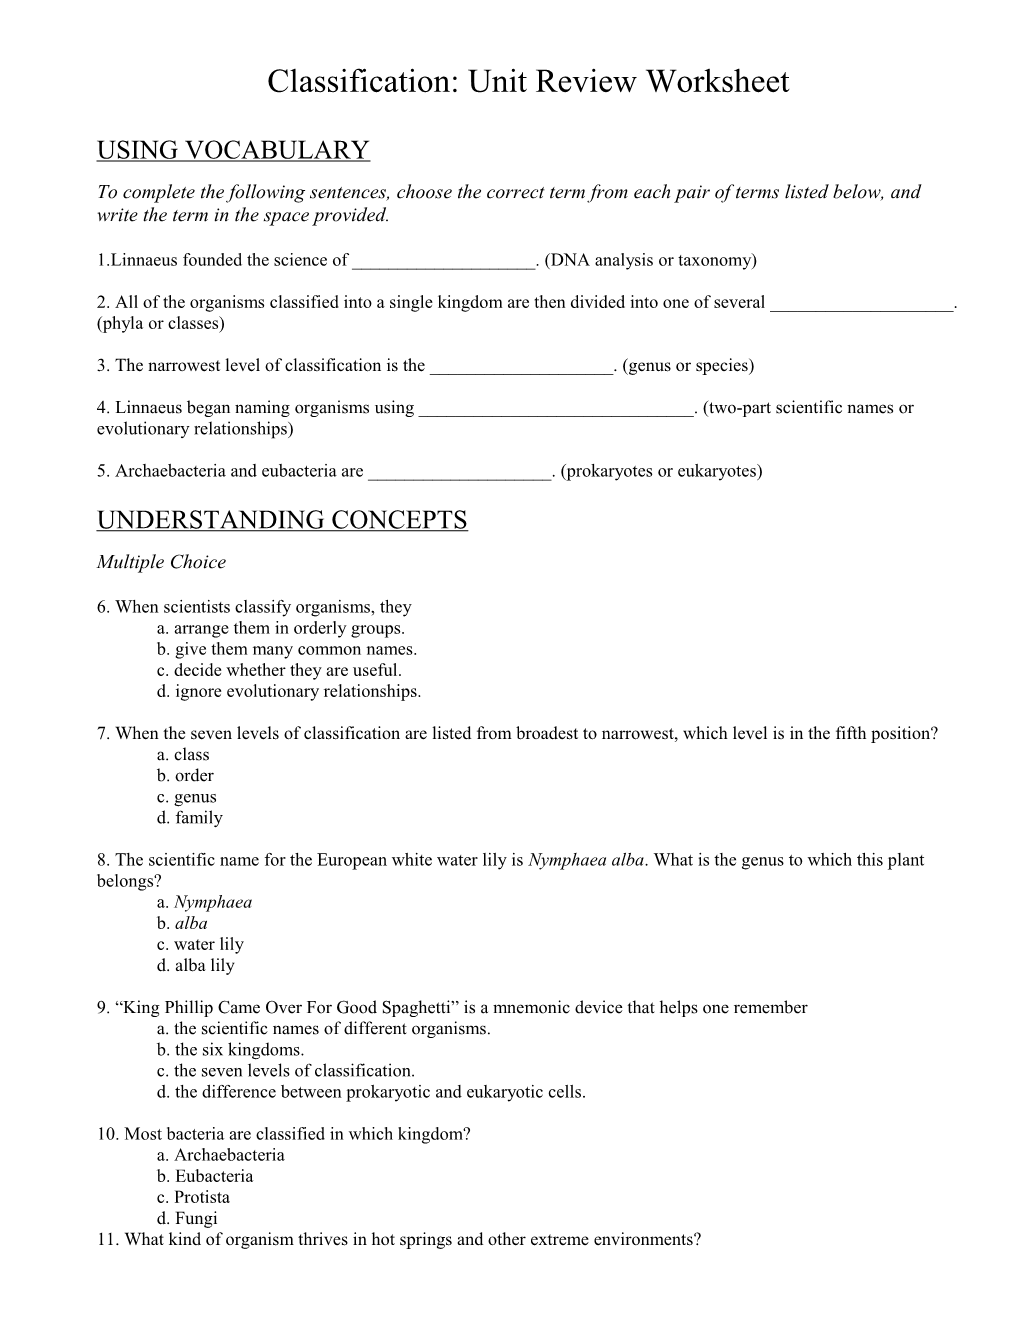 Classification: Unit Review Worksheet